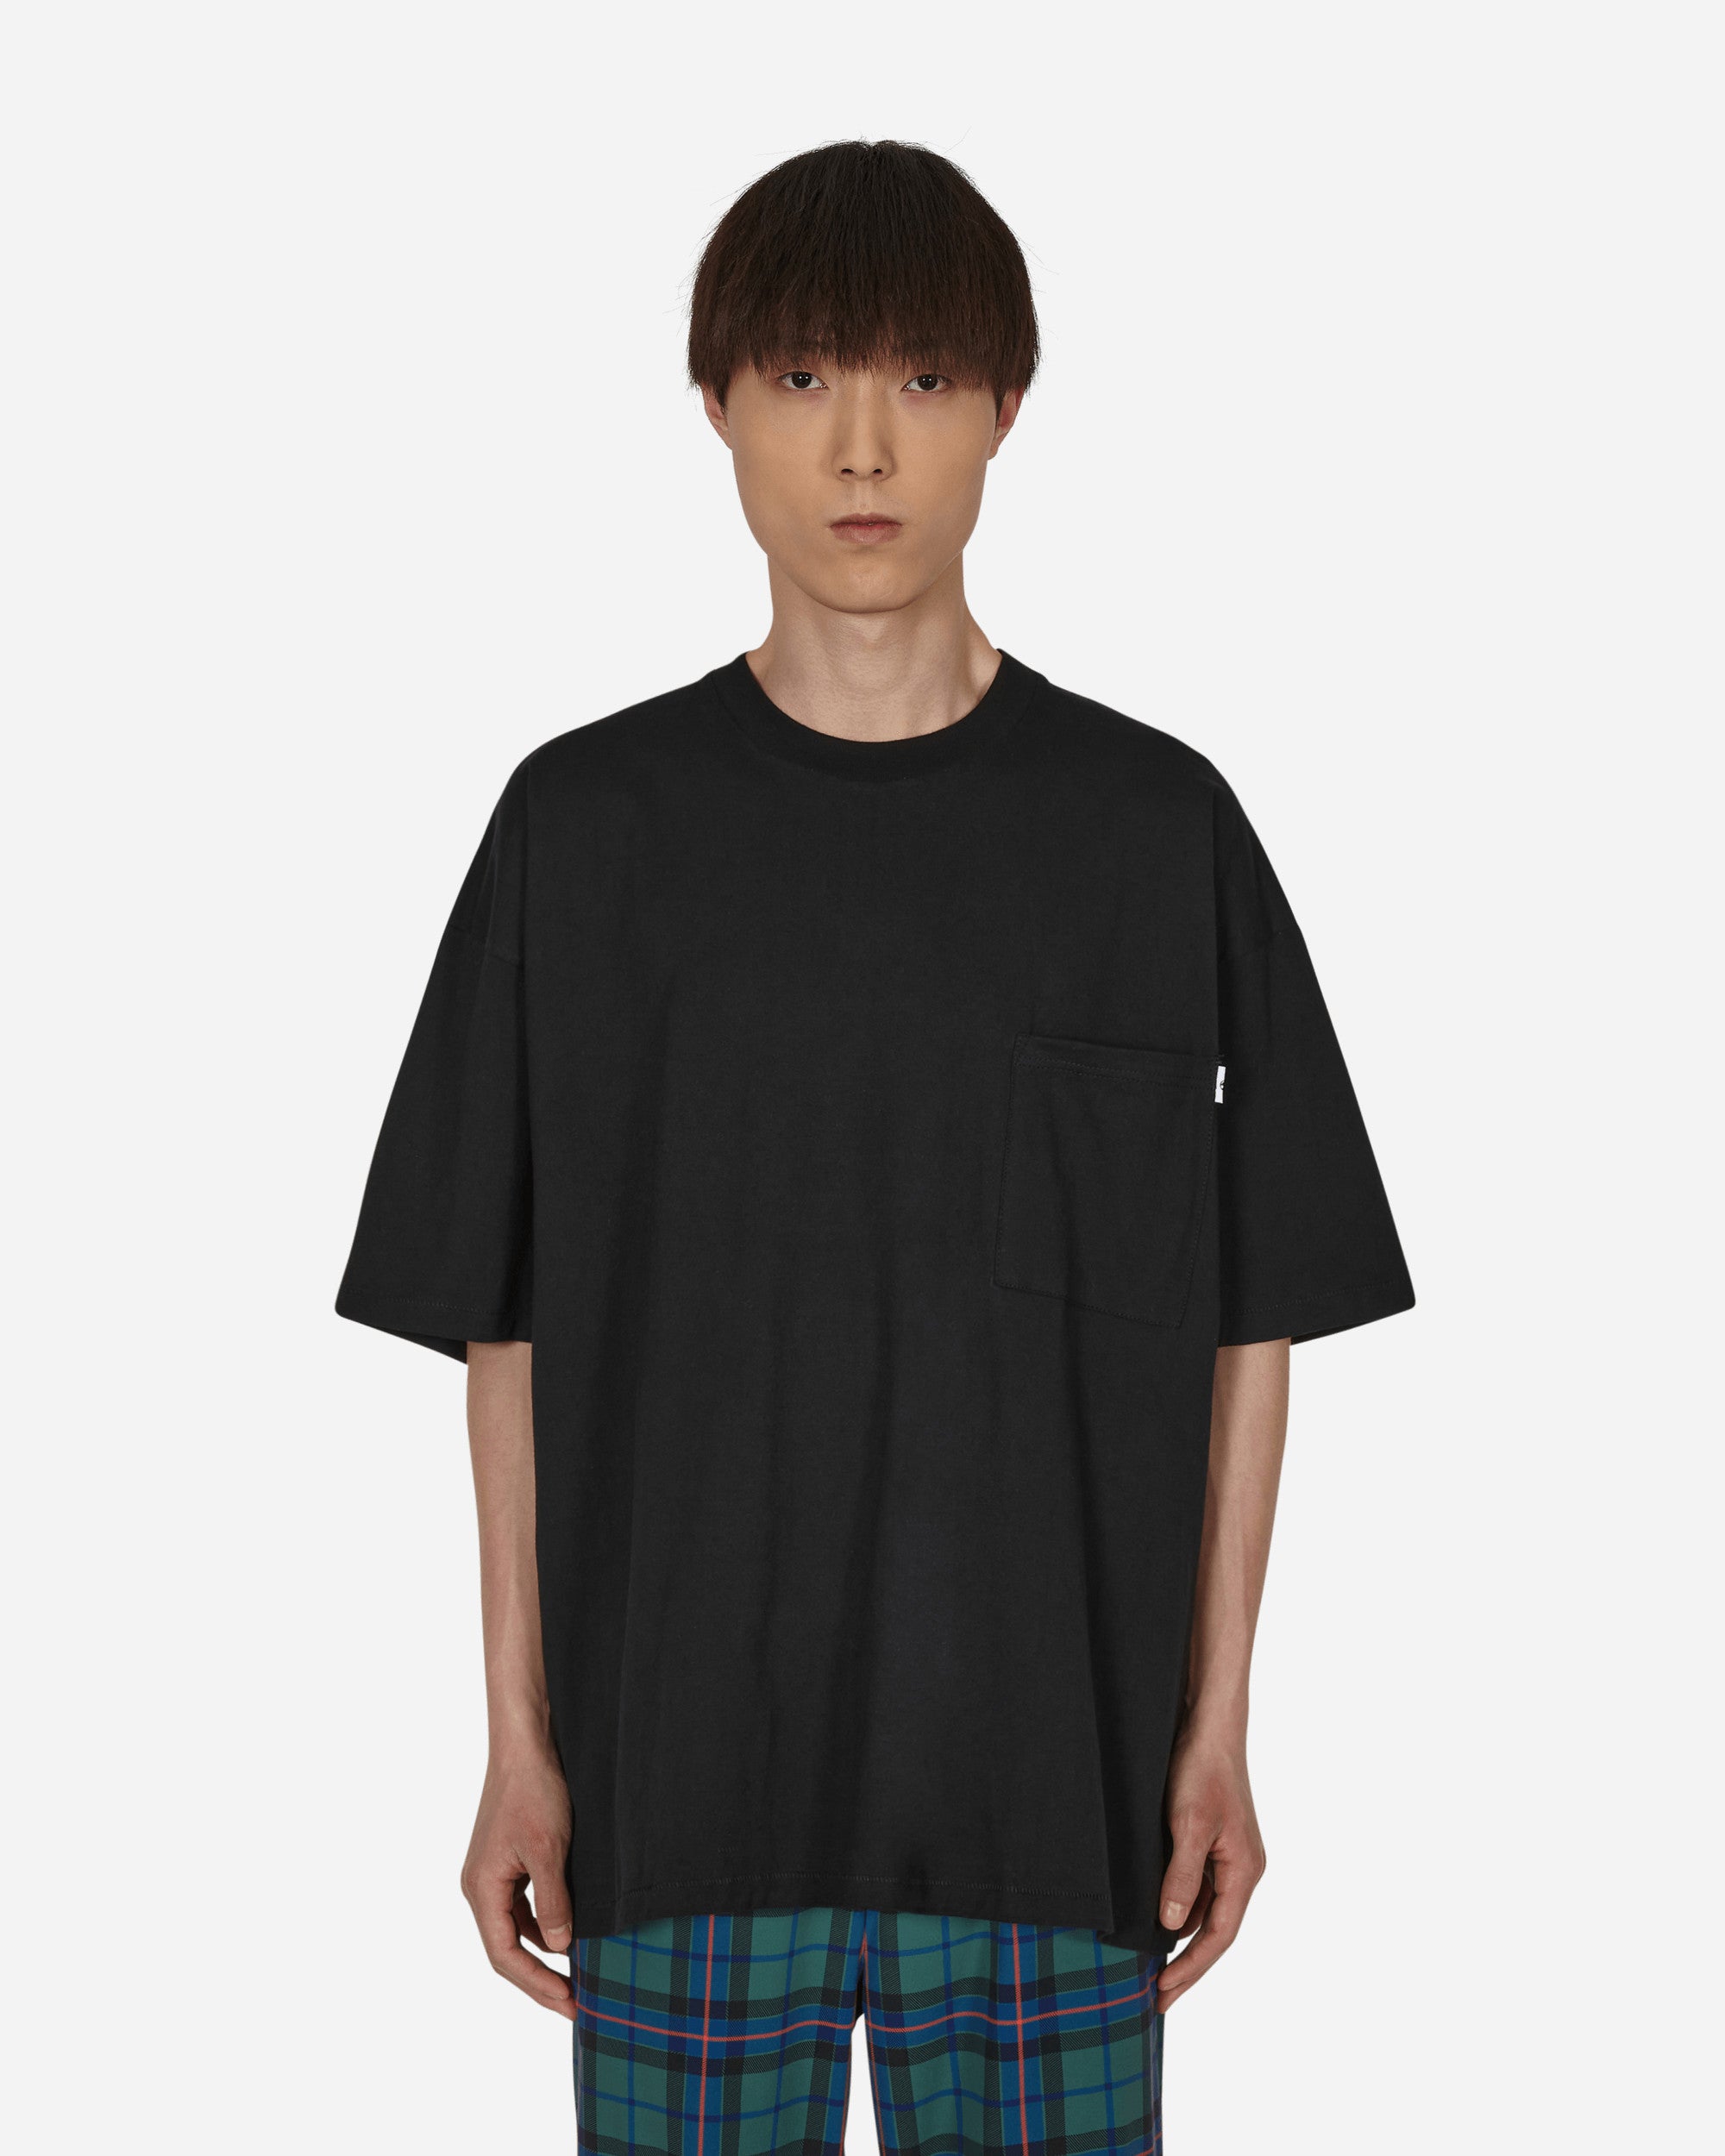 Emblem Snap T-Shirt Black